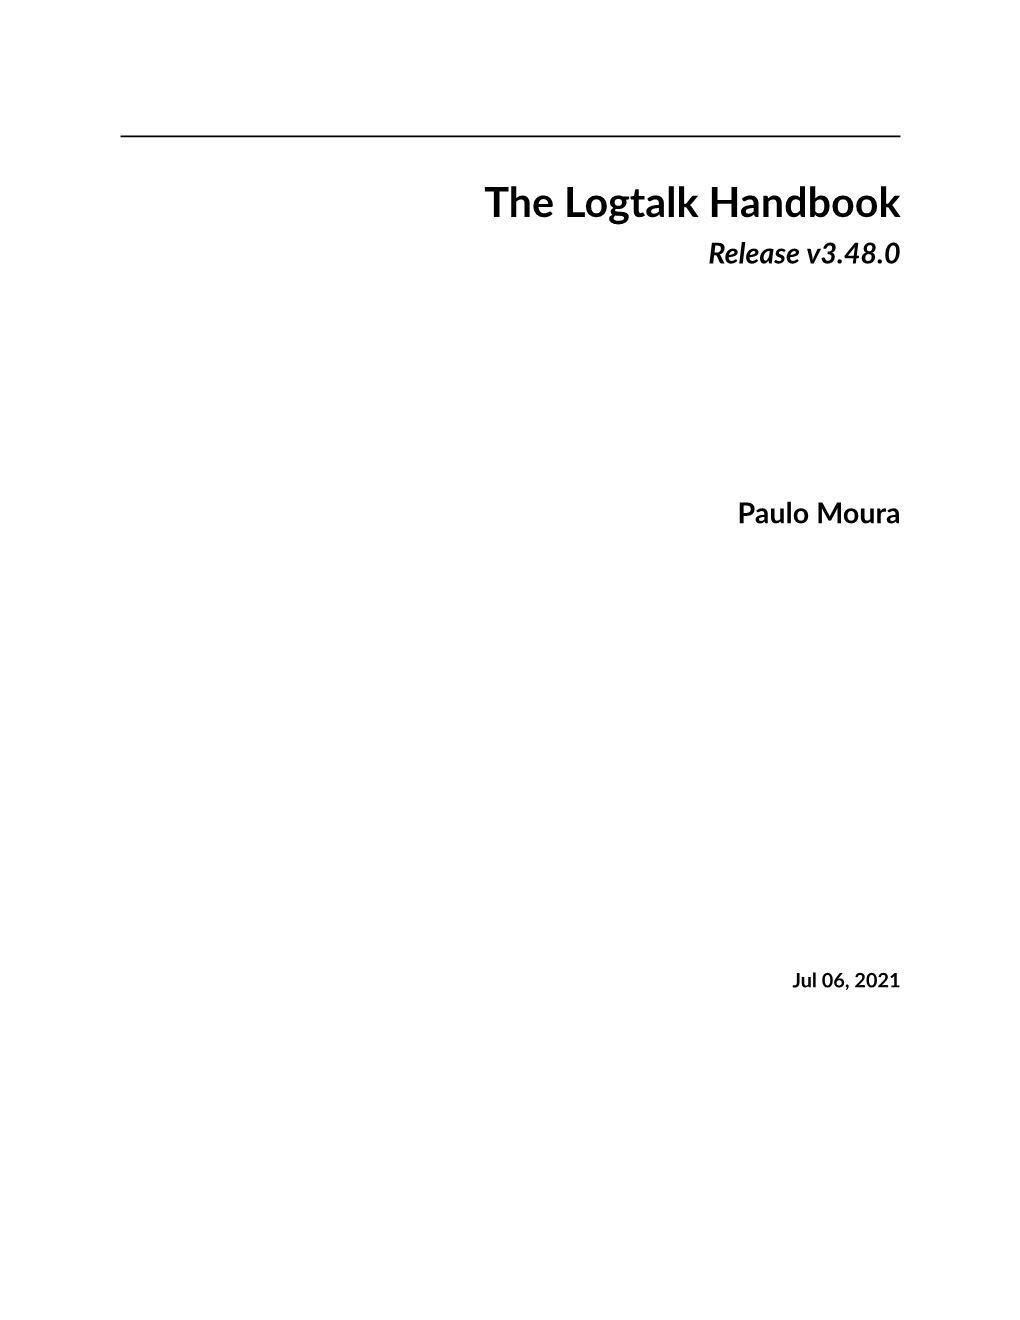 The Logtalk Handbook Release V3.48.0